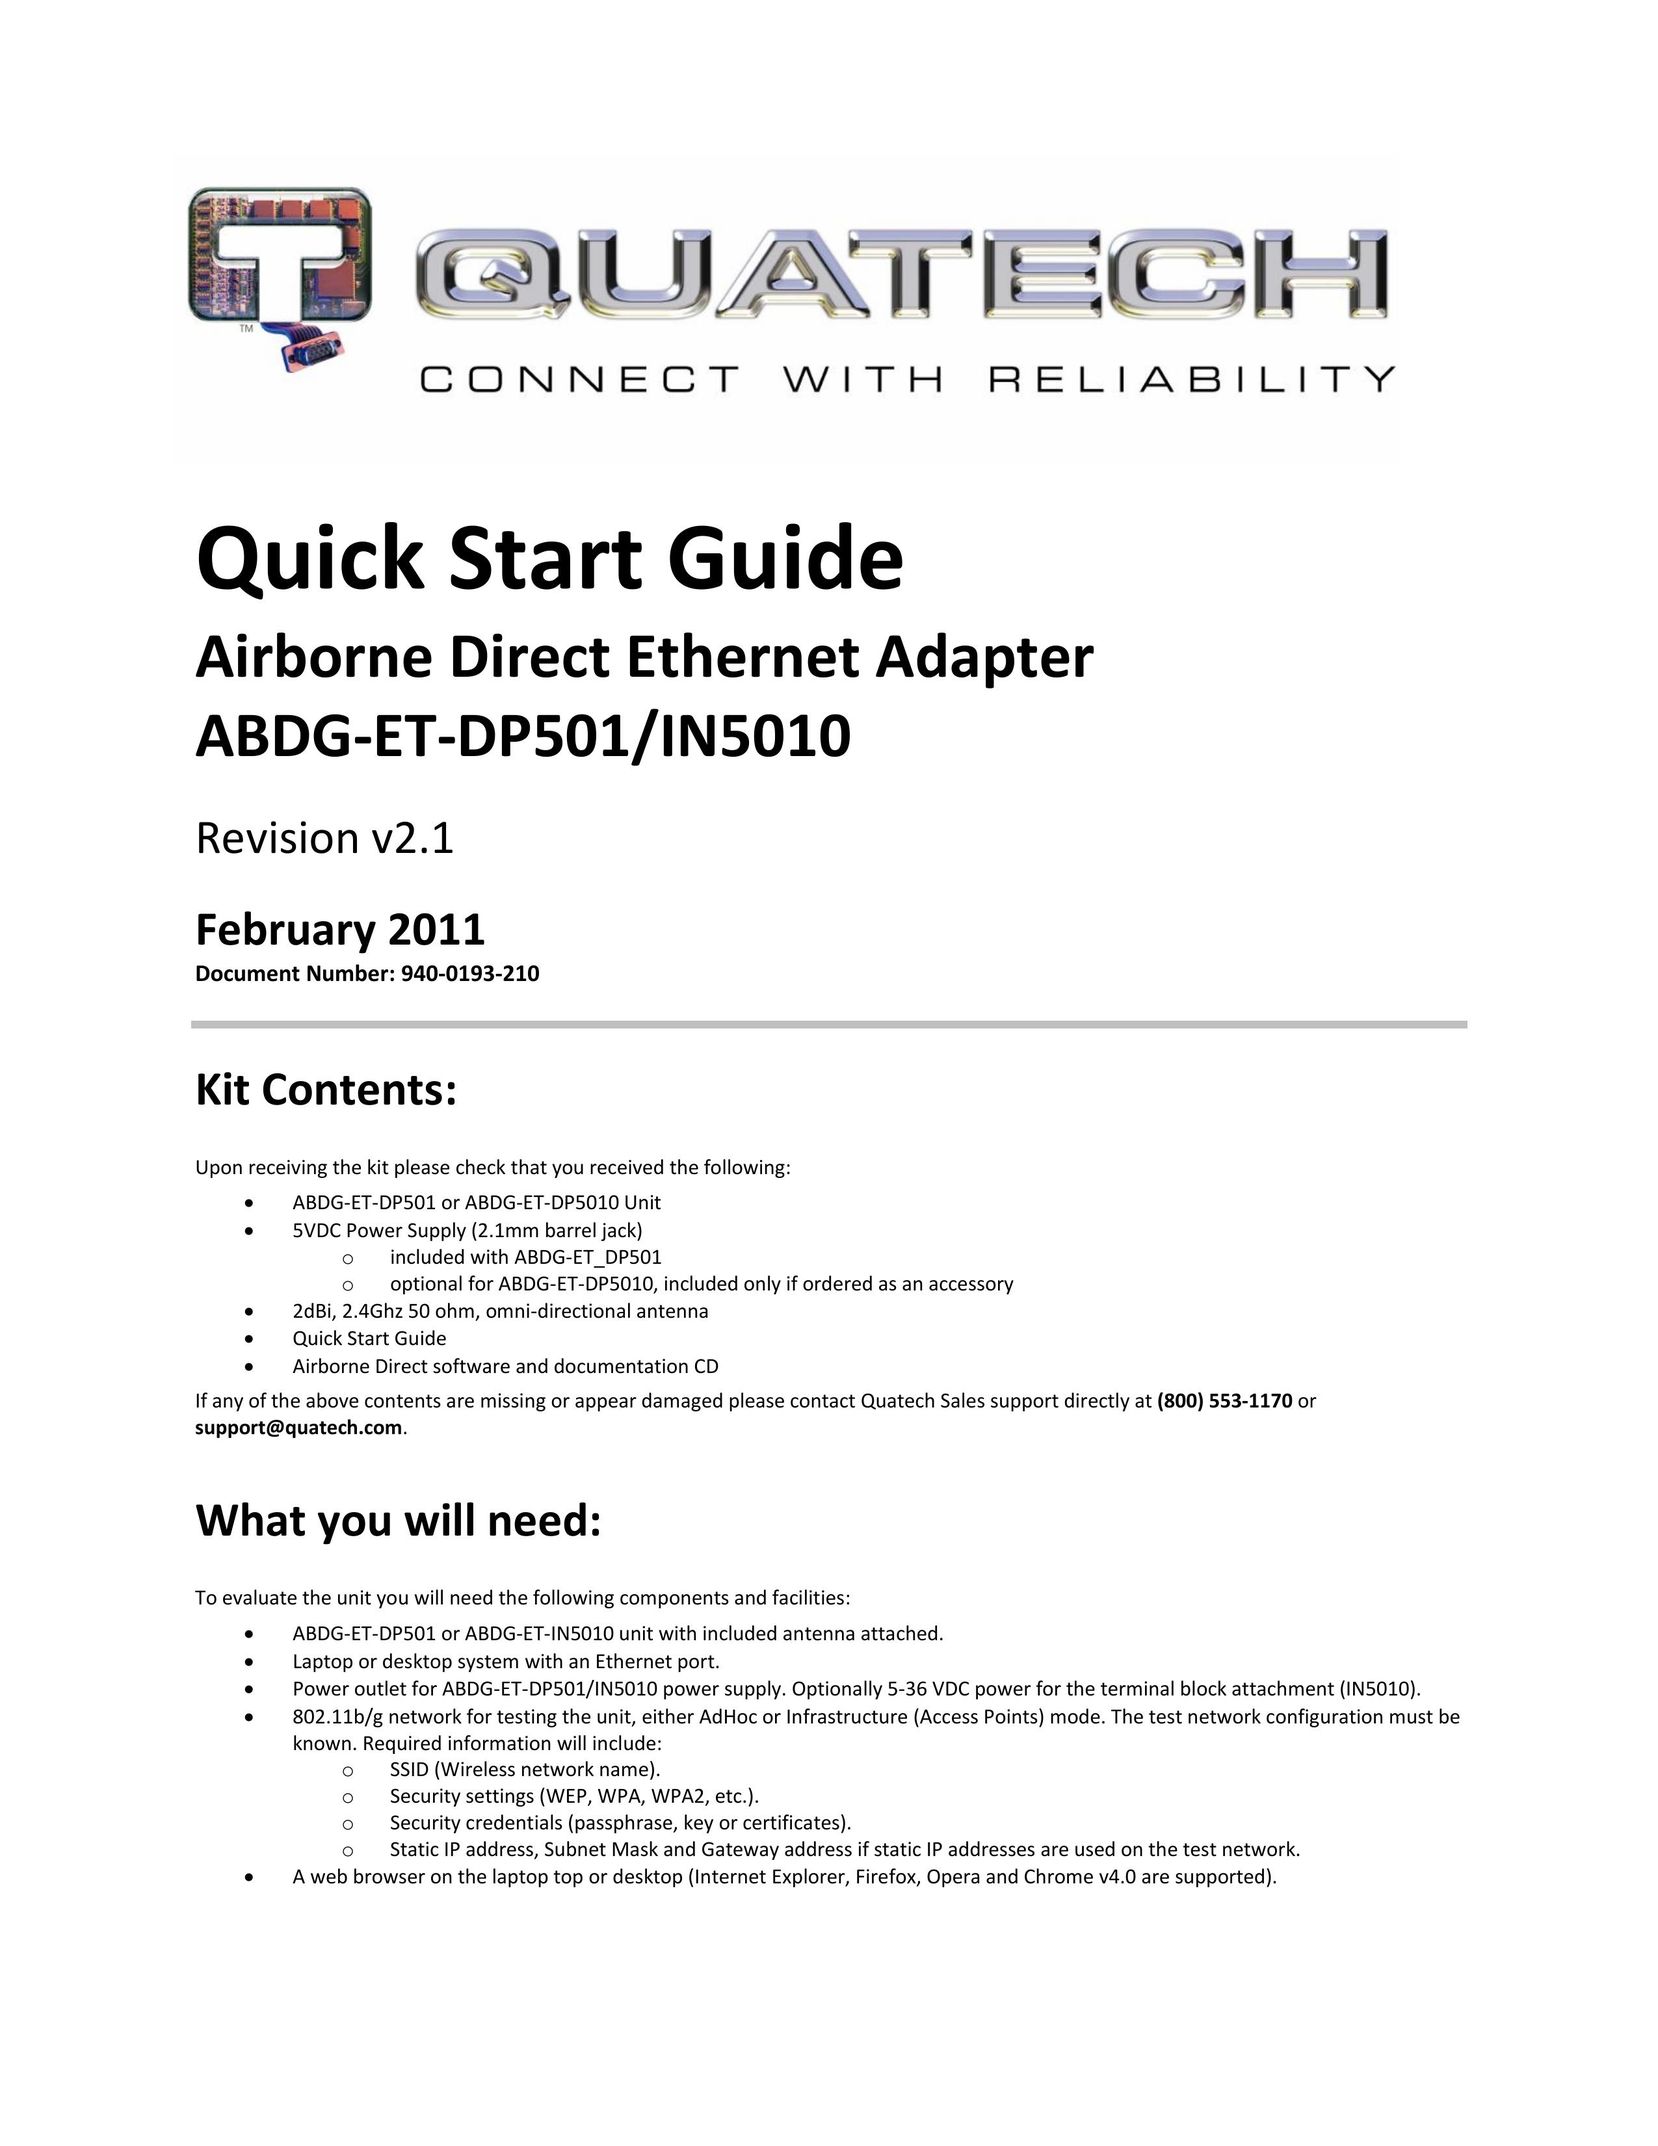 Quatech ABDG-ET-DP501/IN5010 Network Card User Manual